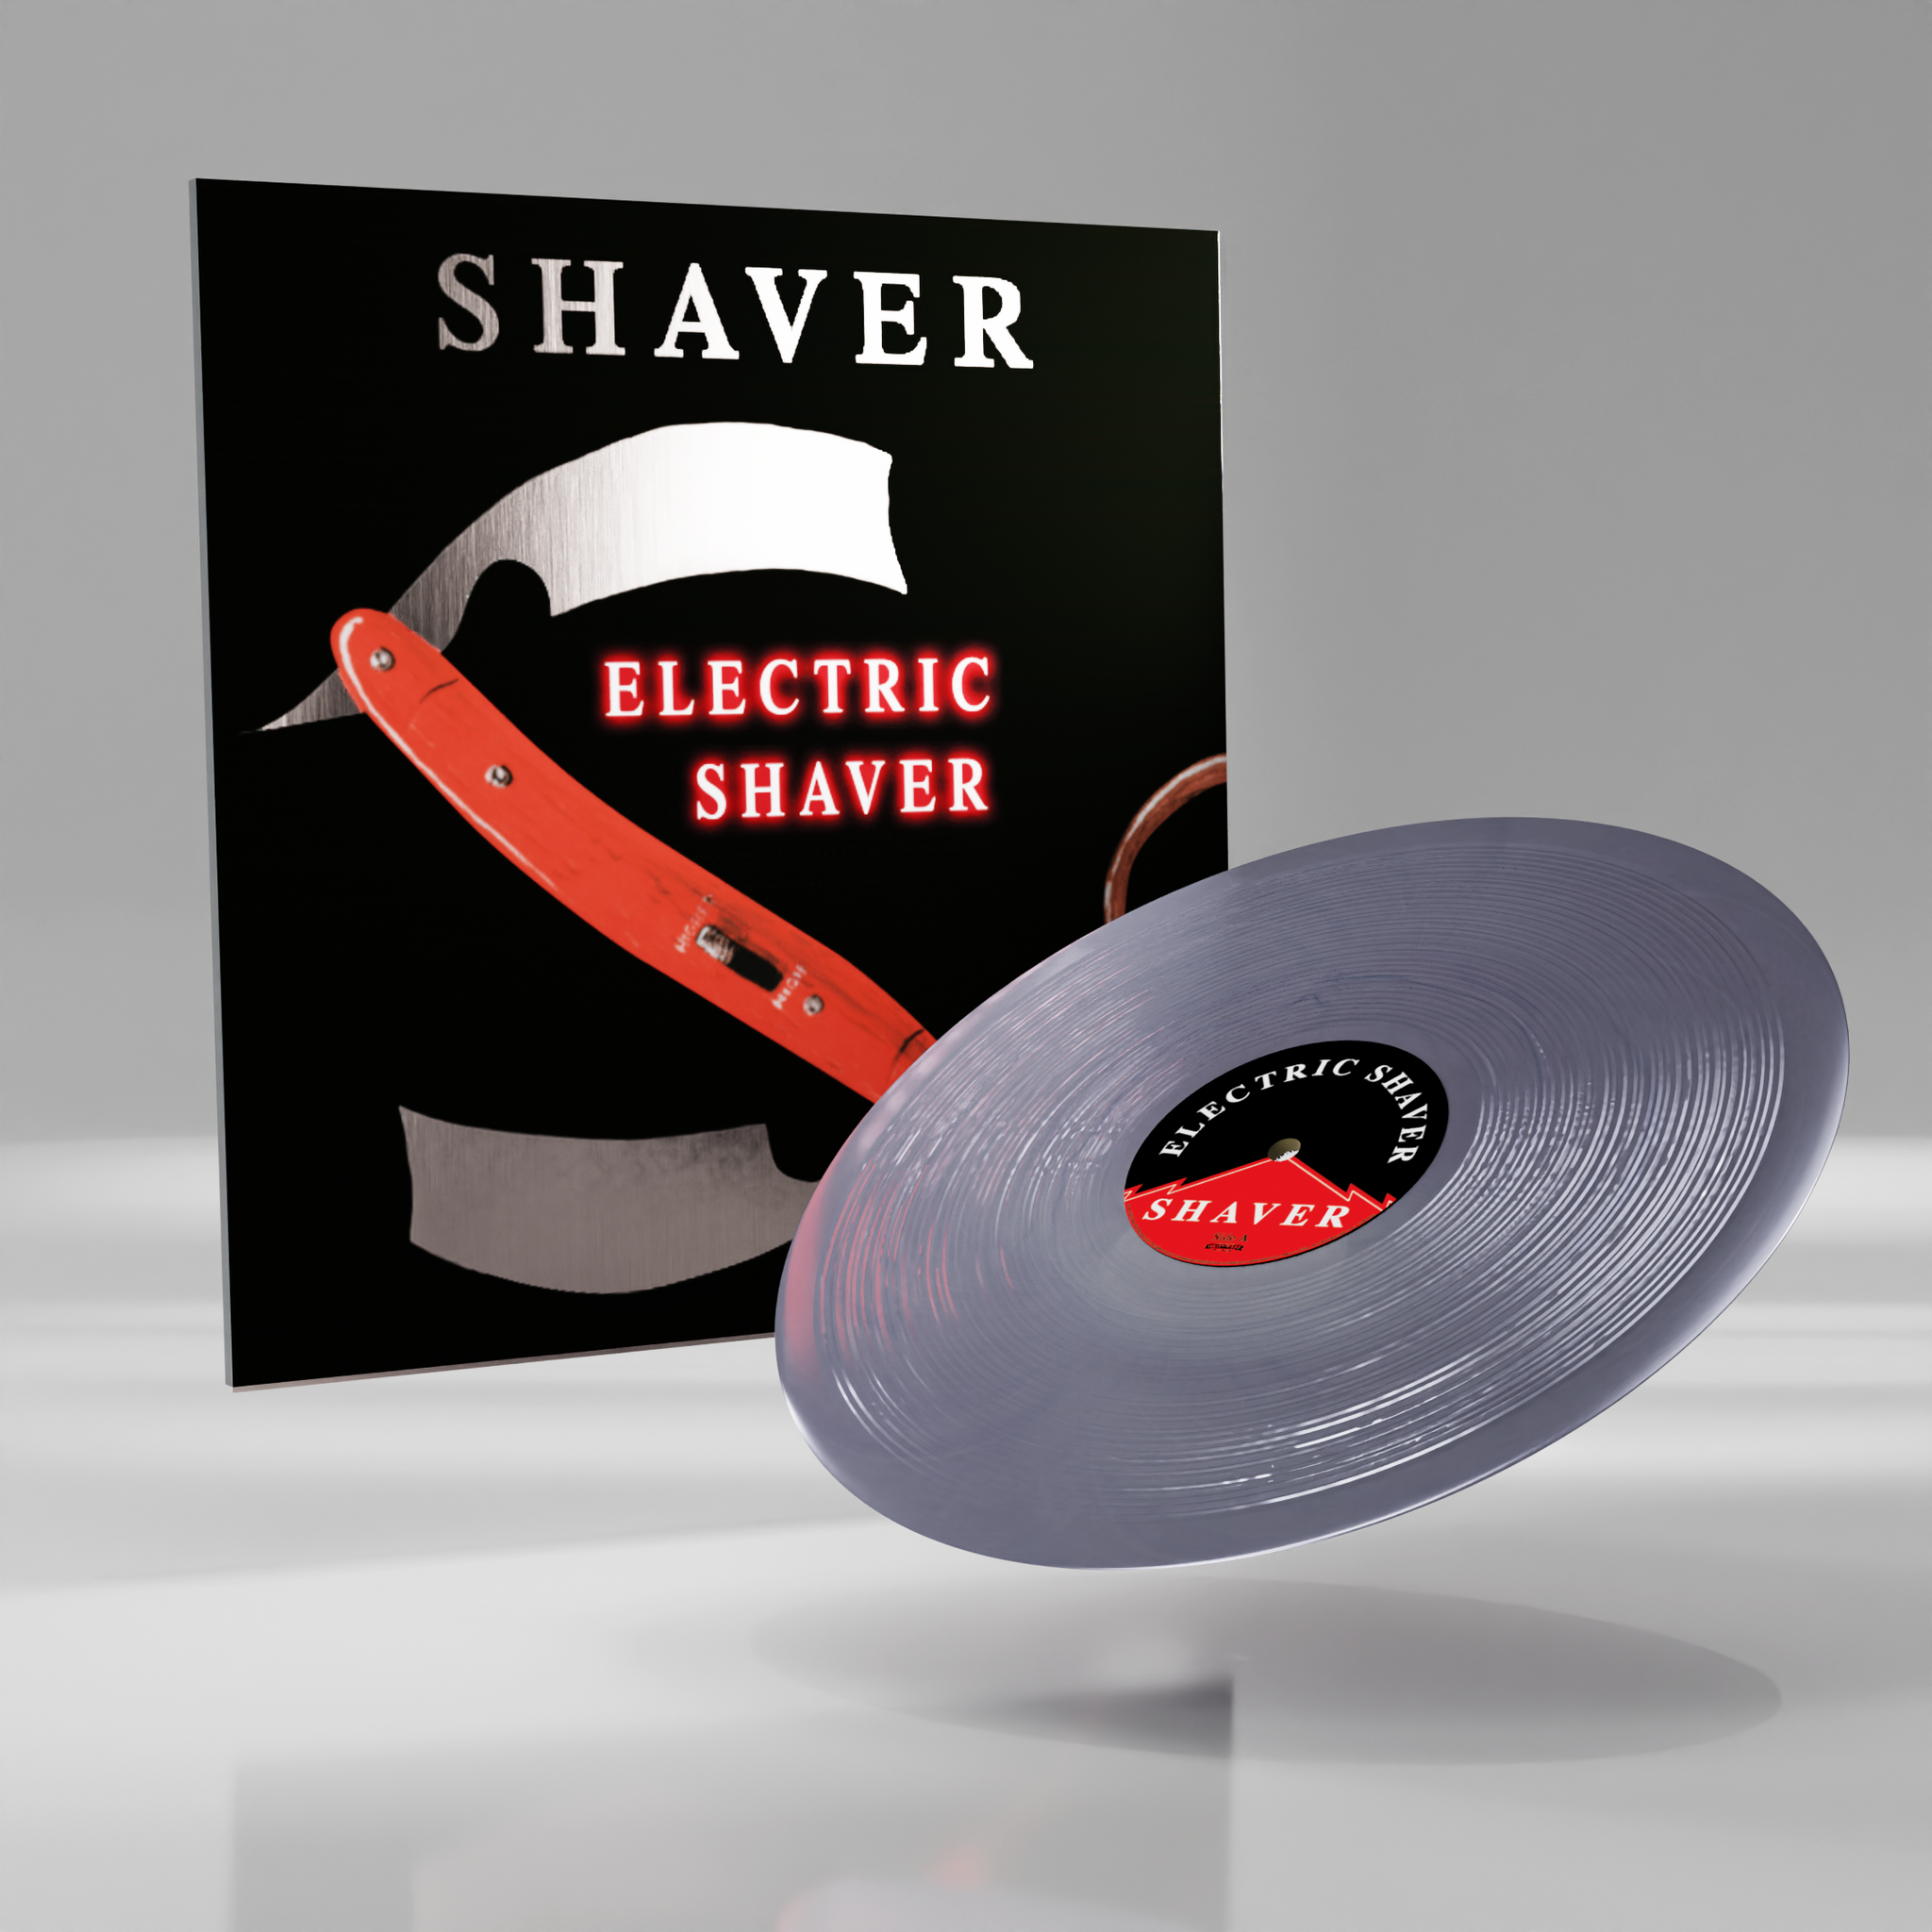 Shaver - Electric Shaver [Color Vinyl]